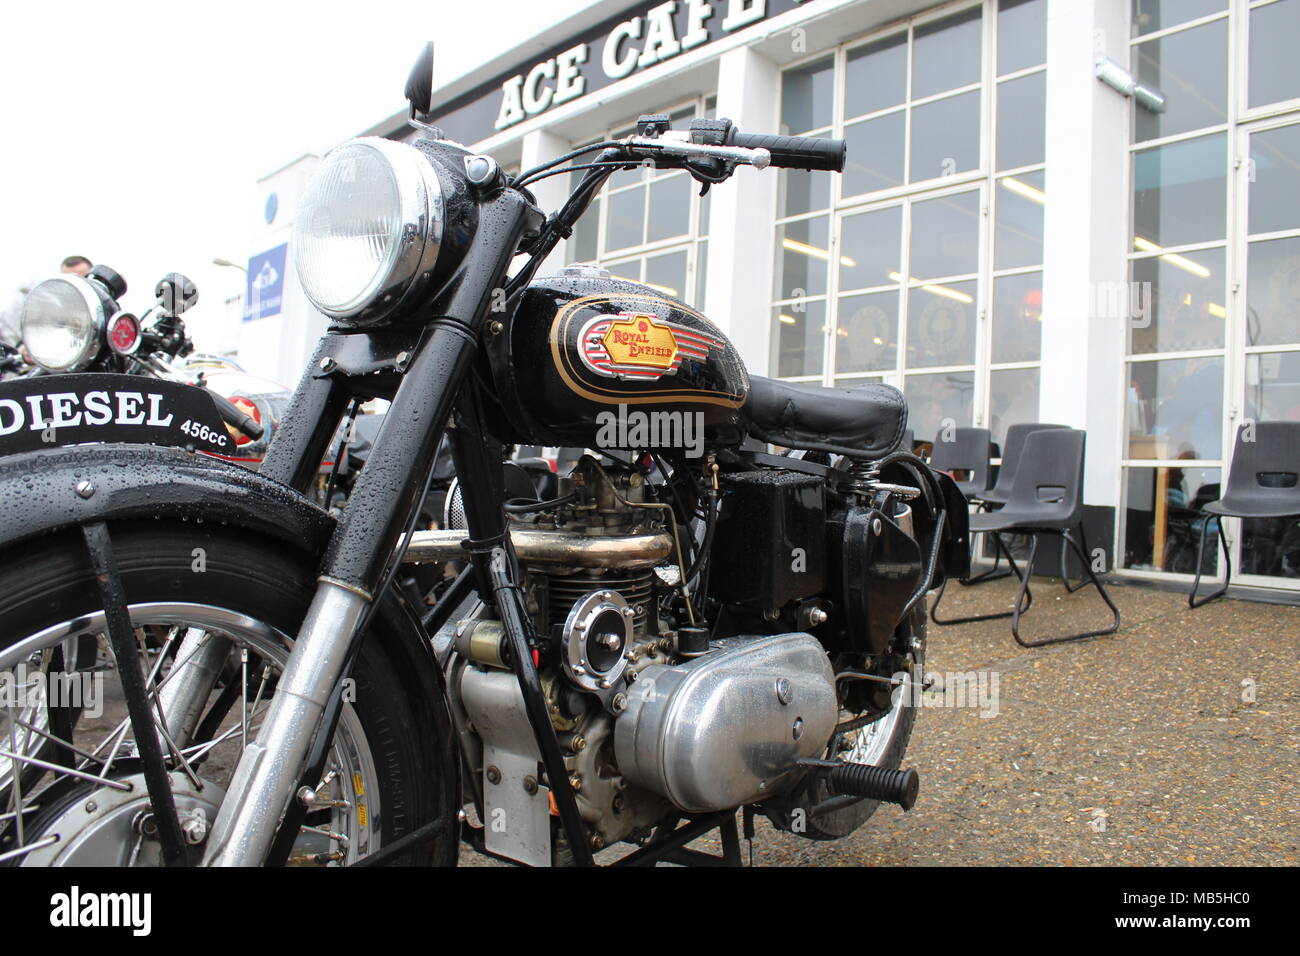 Royal Enfield Diesel Motorcycle Stock Photo - Alamy